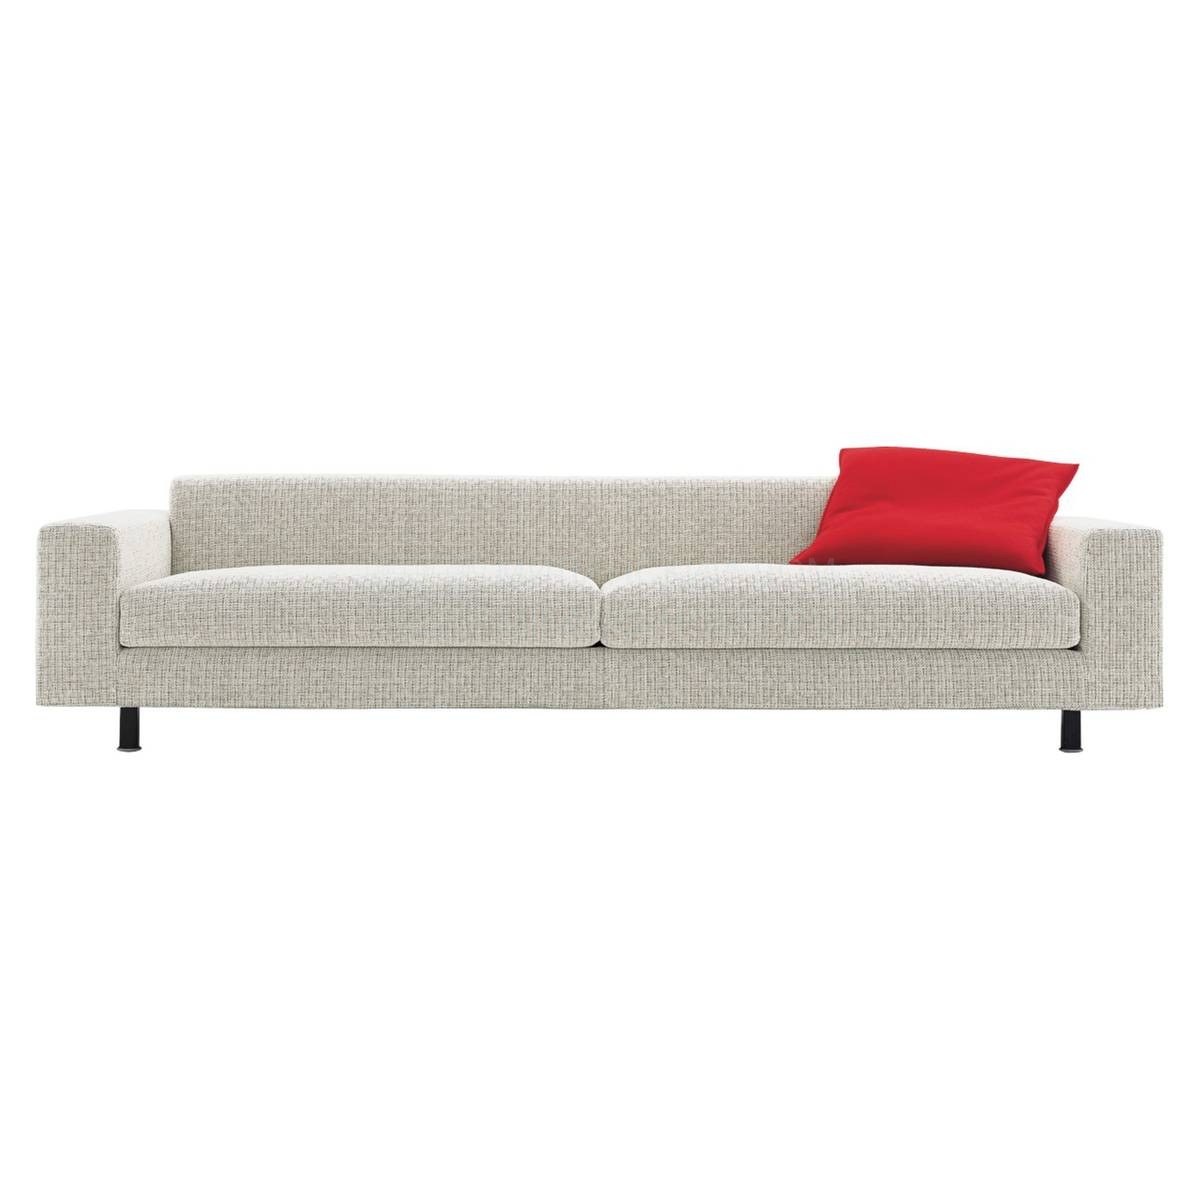 Прямой диван Quack/ sofa из Италии фабрики CAPPELLINI